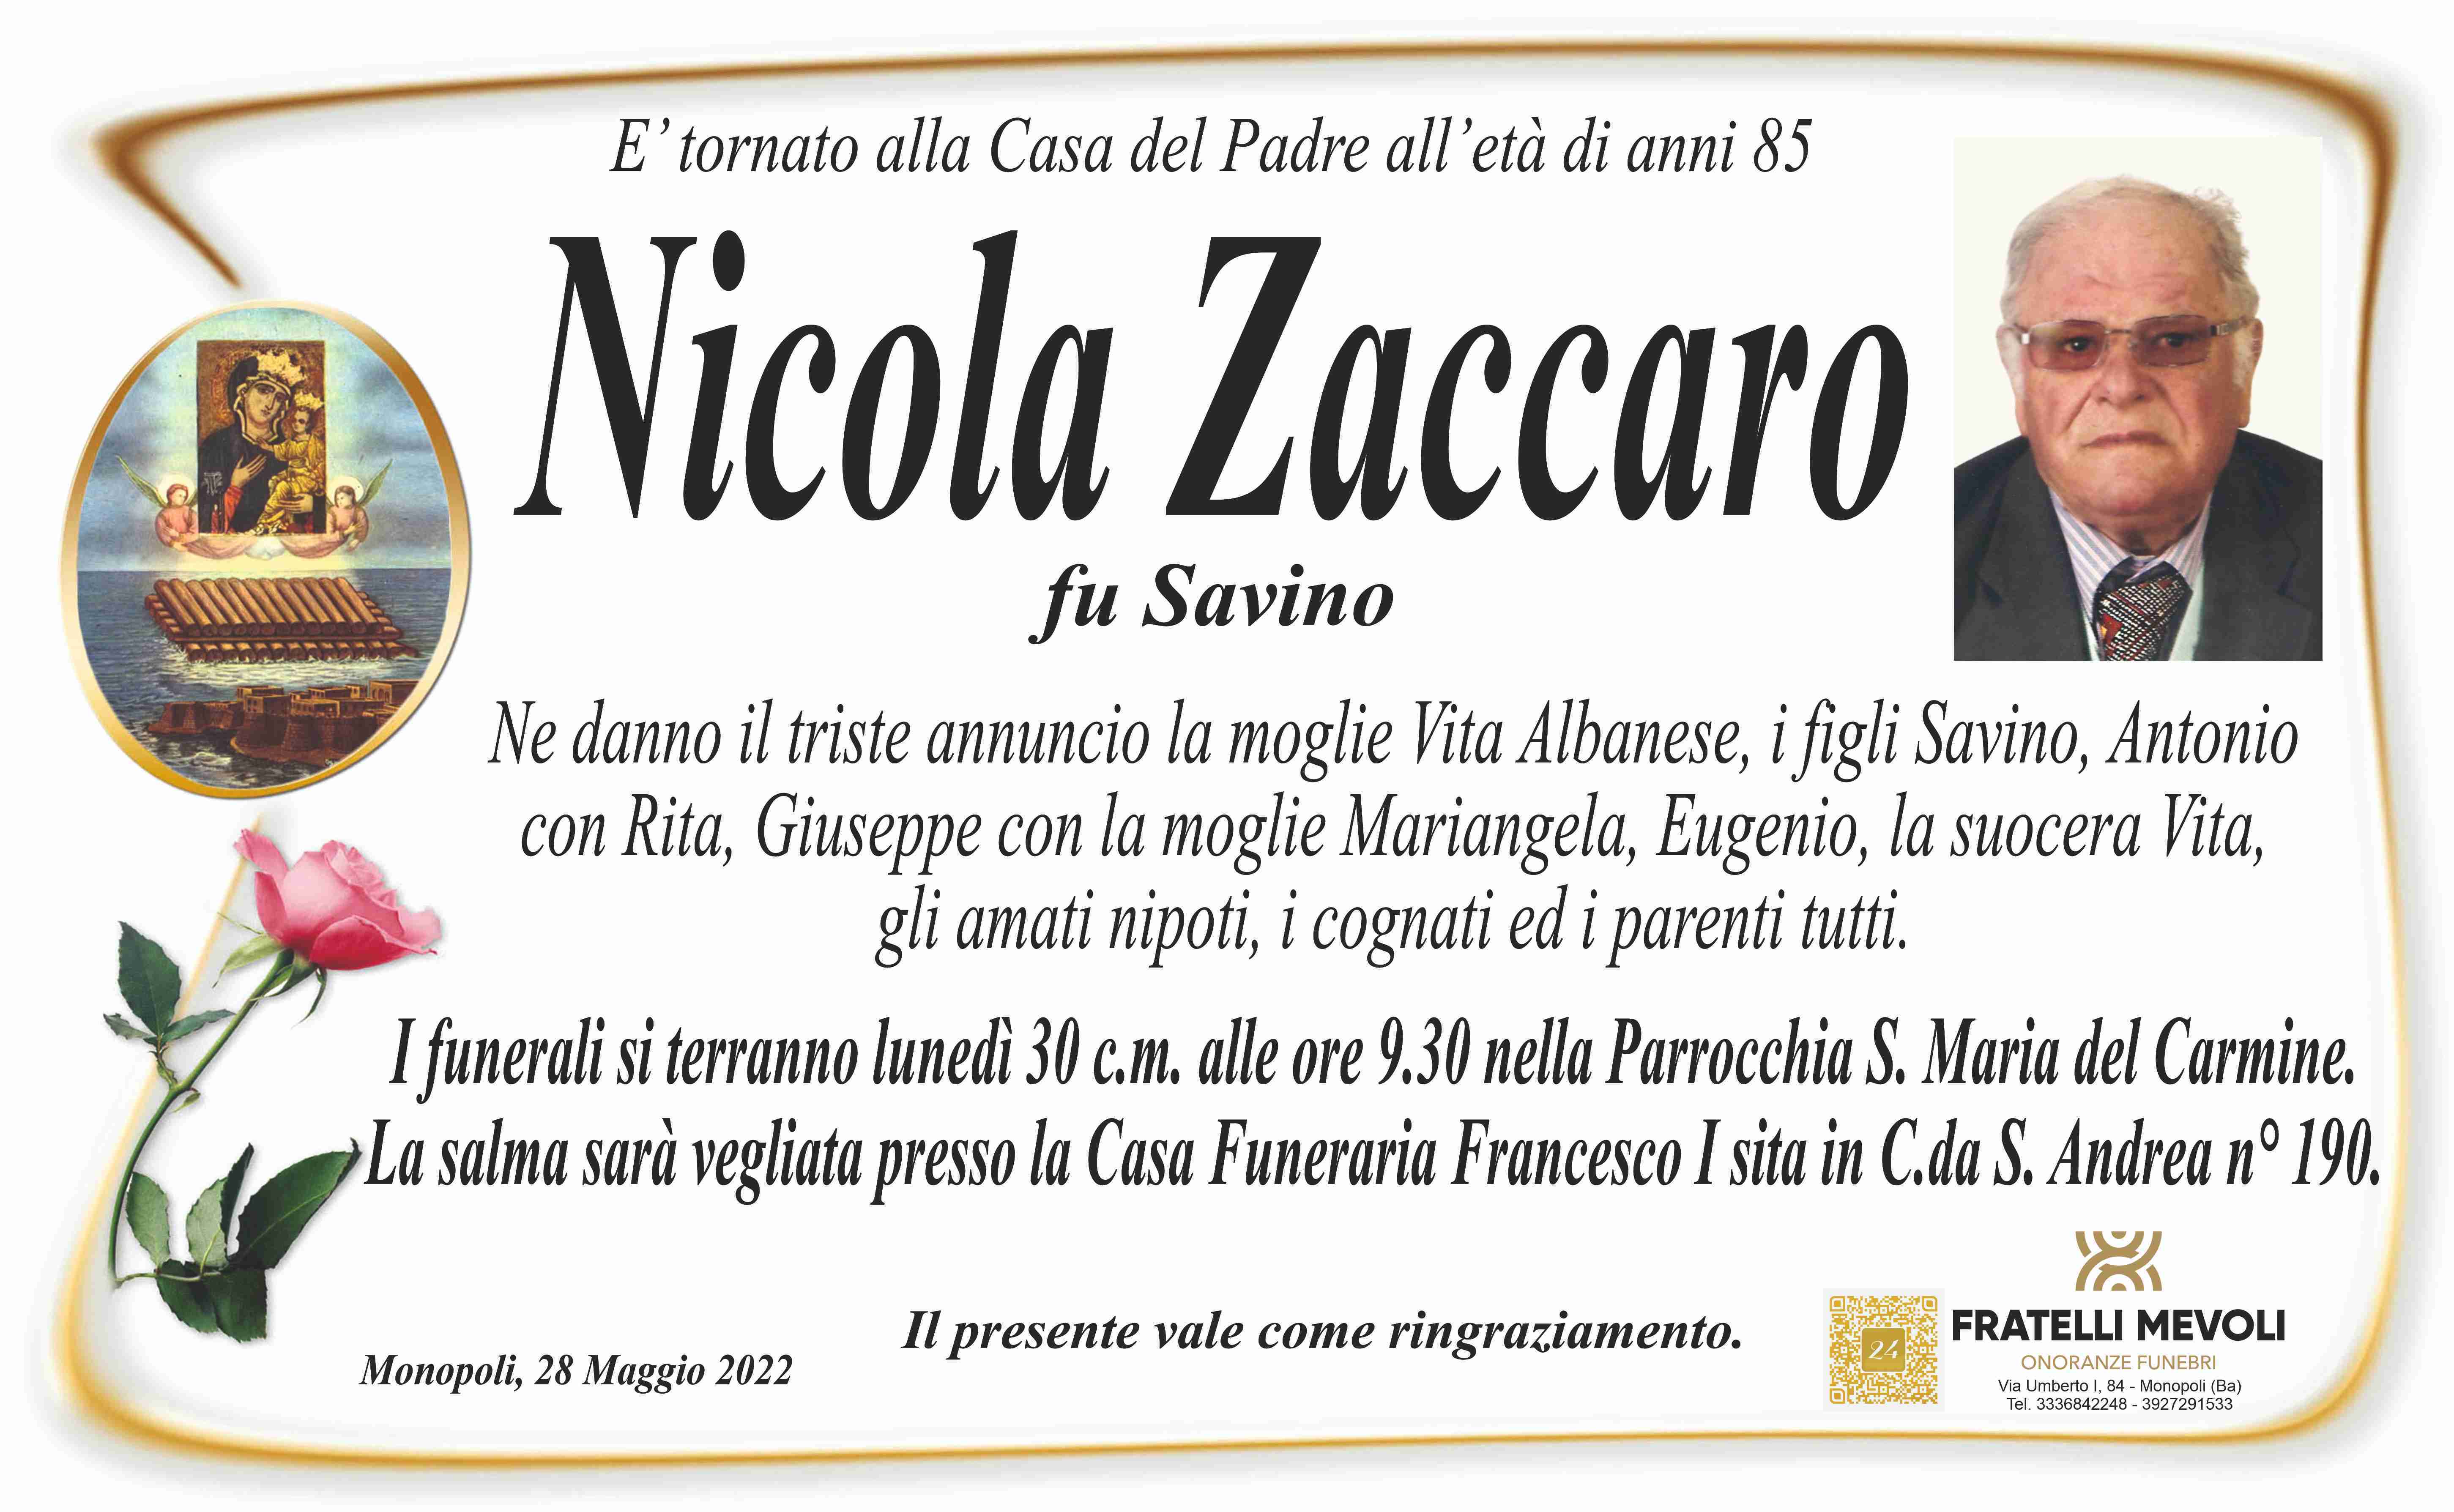 Nicola Zaccaro